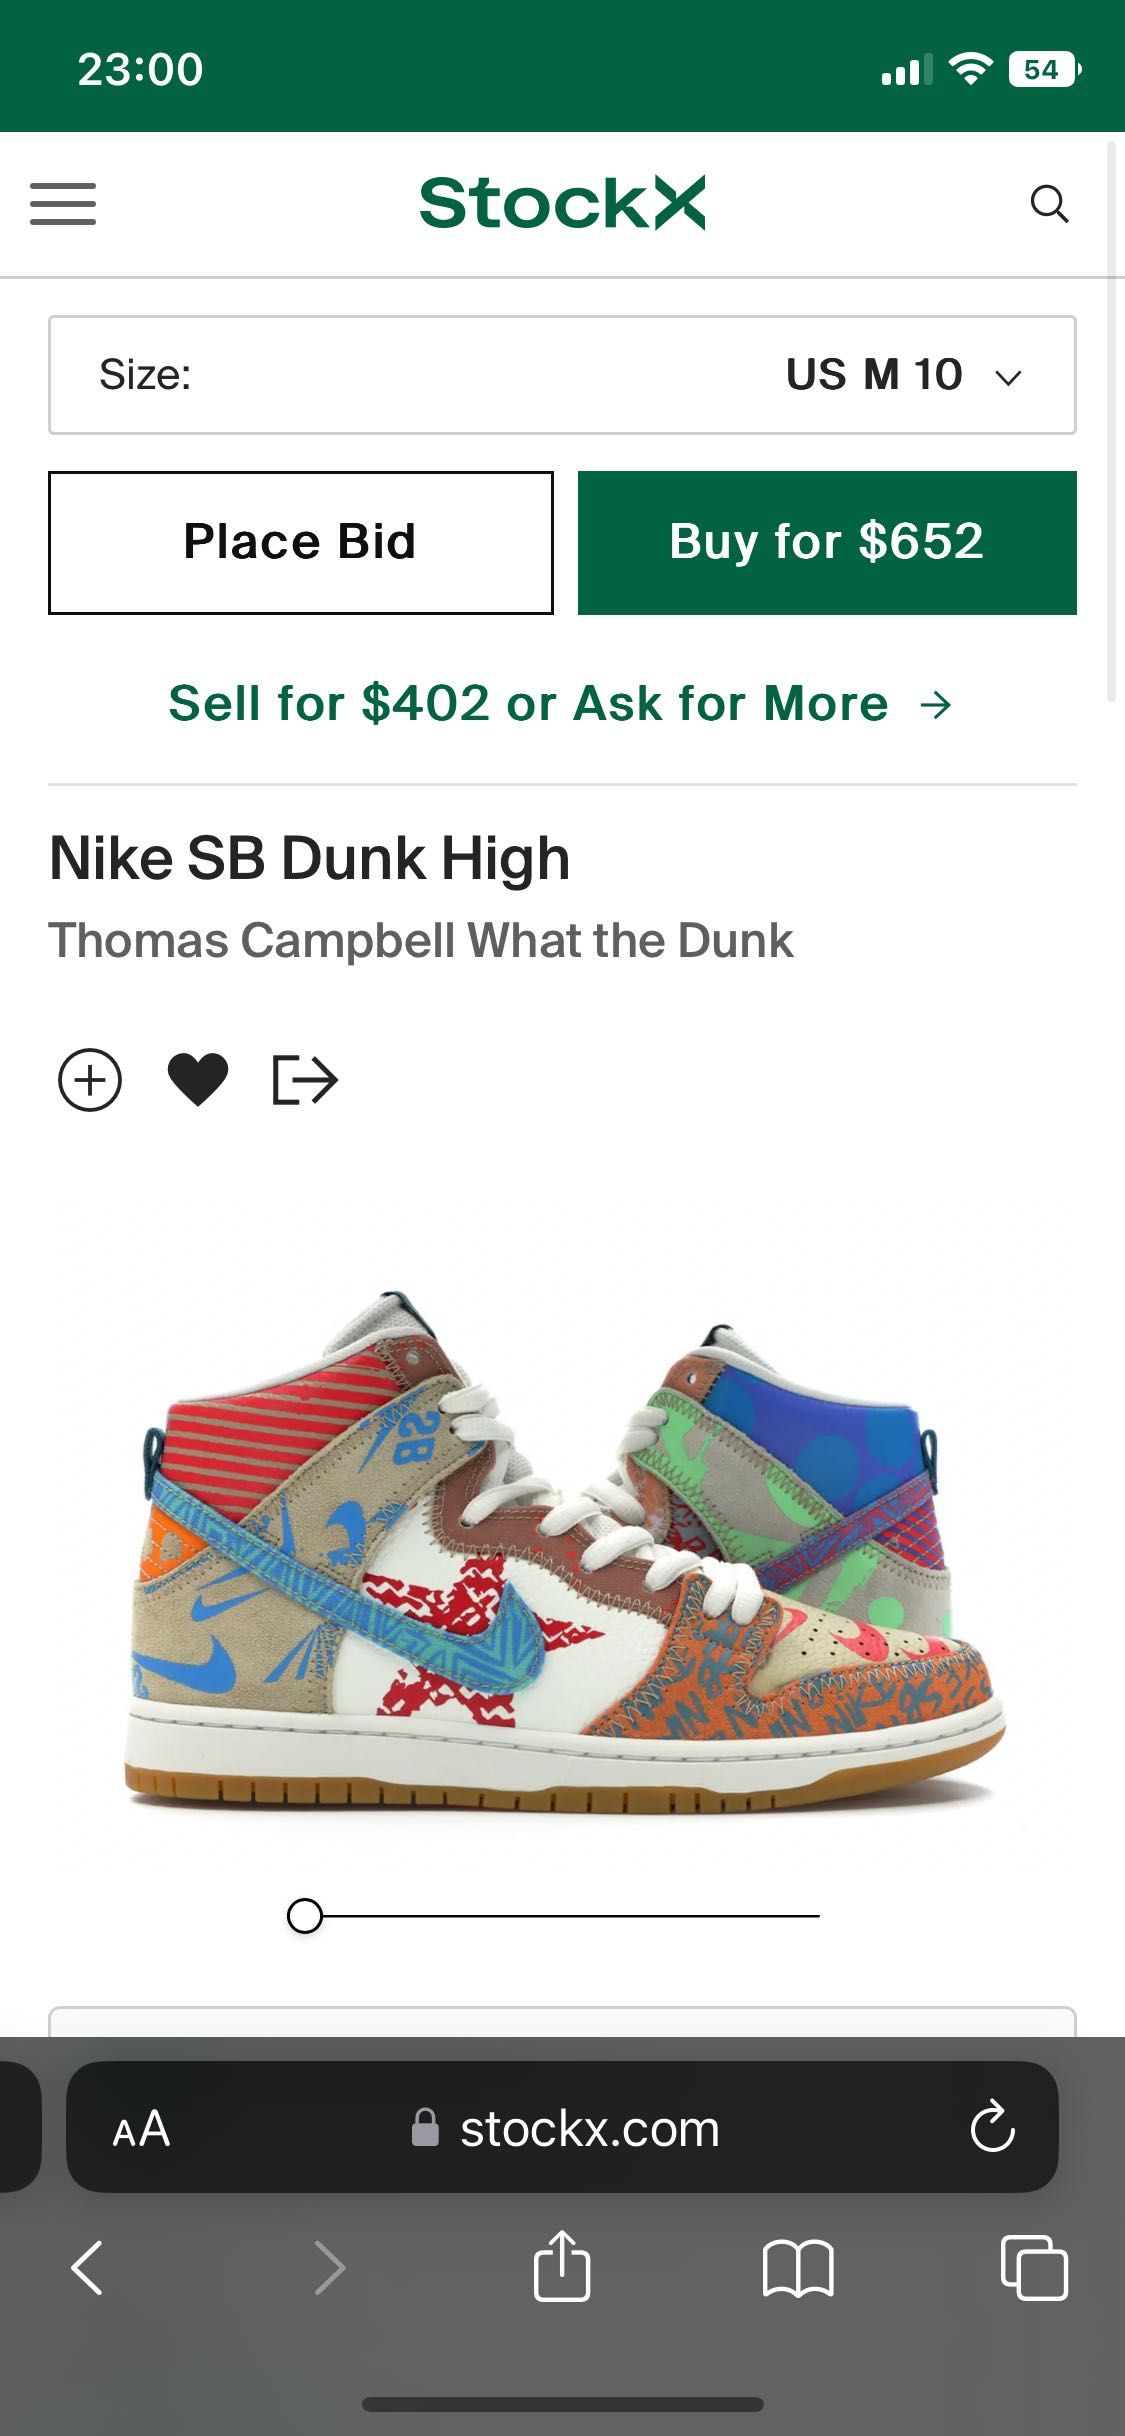 Nike Sb Zoom Dunk High Prem “What The”